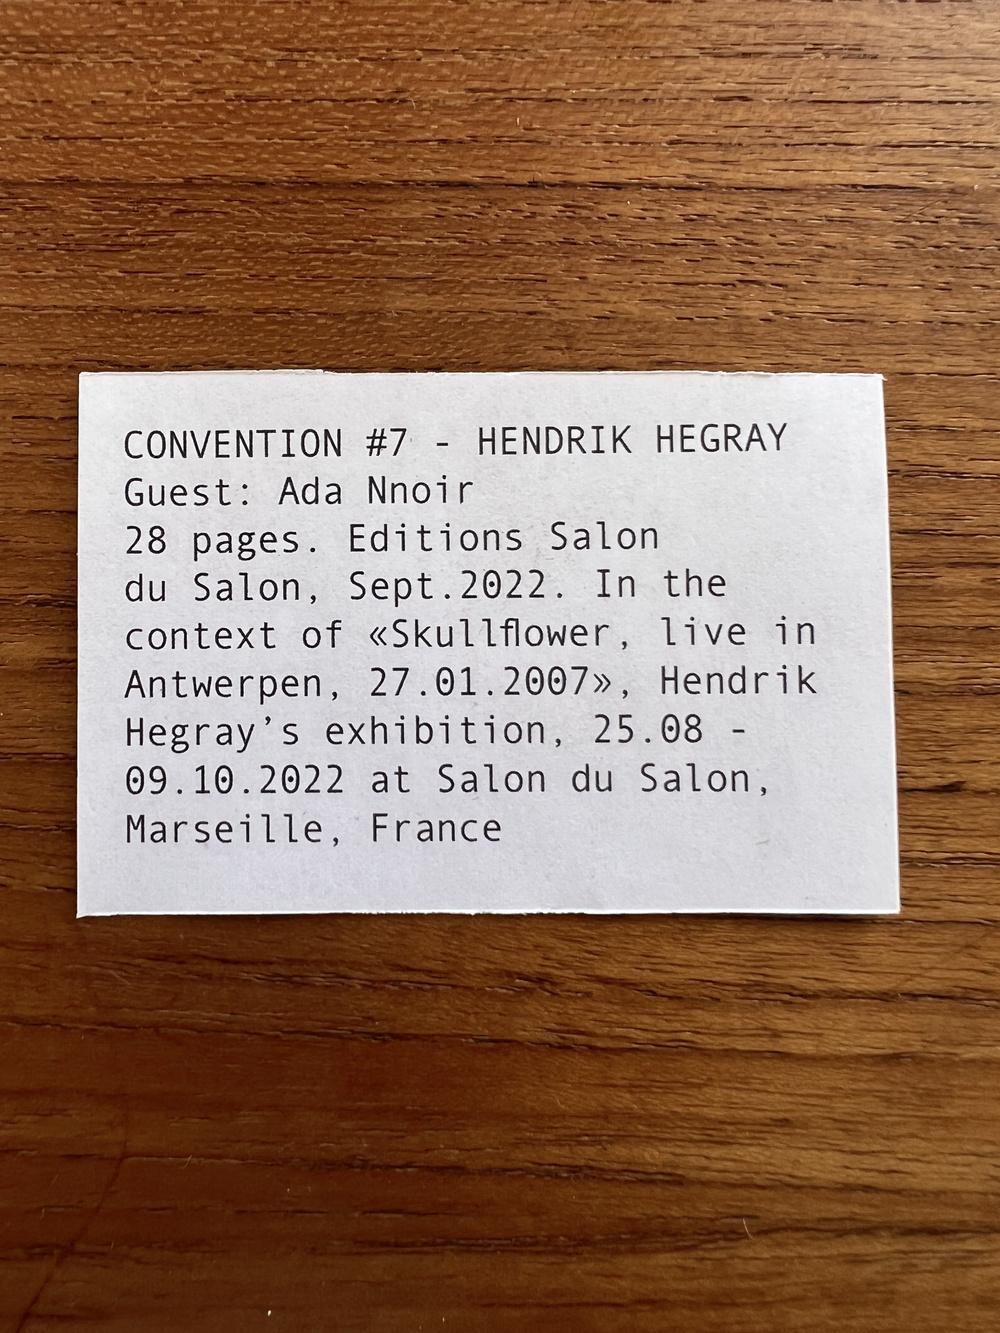 CONVENTION 7 - HENDRIK HEGRAY